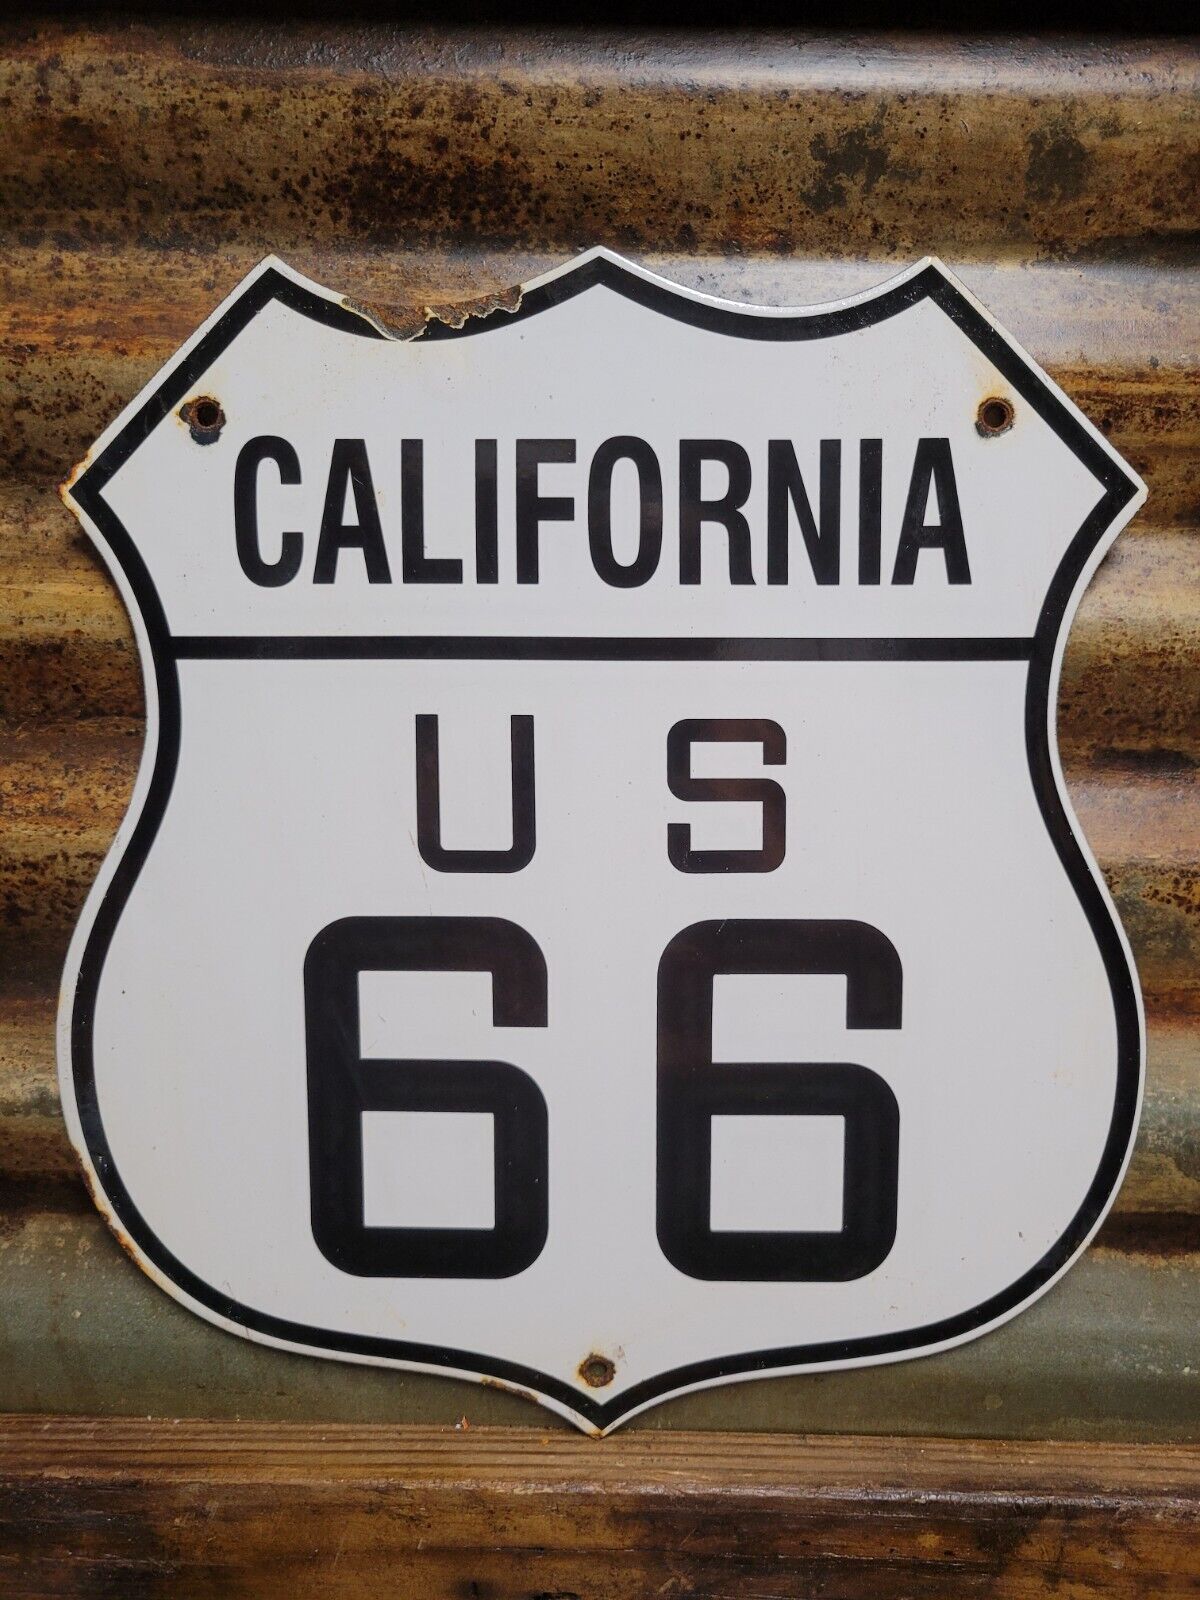 VINTAGE US ROUTE 66 OLD PORCELAIN SIGN US CALIFORNIA HIGHWAY TRANSIT ROAD SHIELD